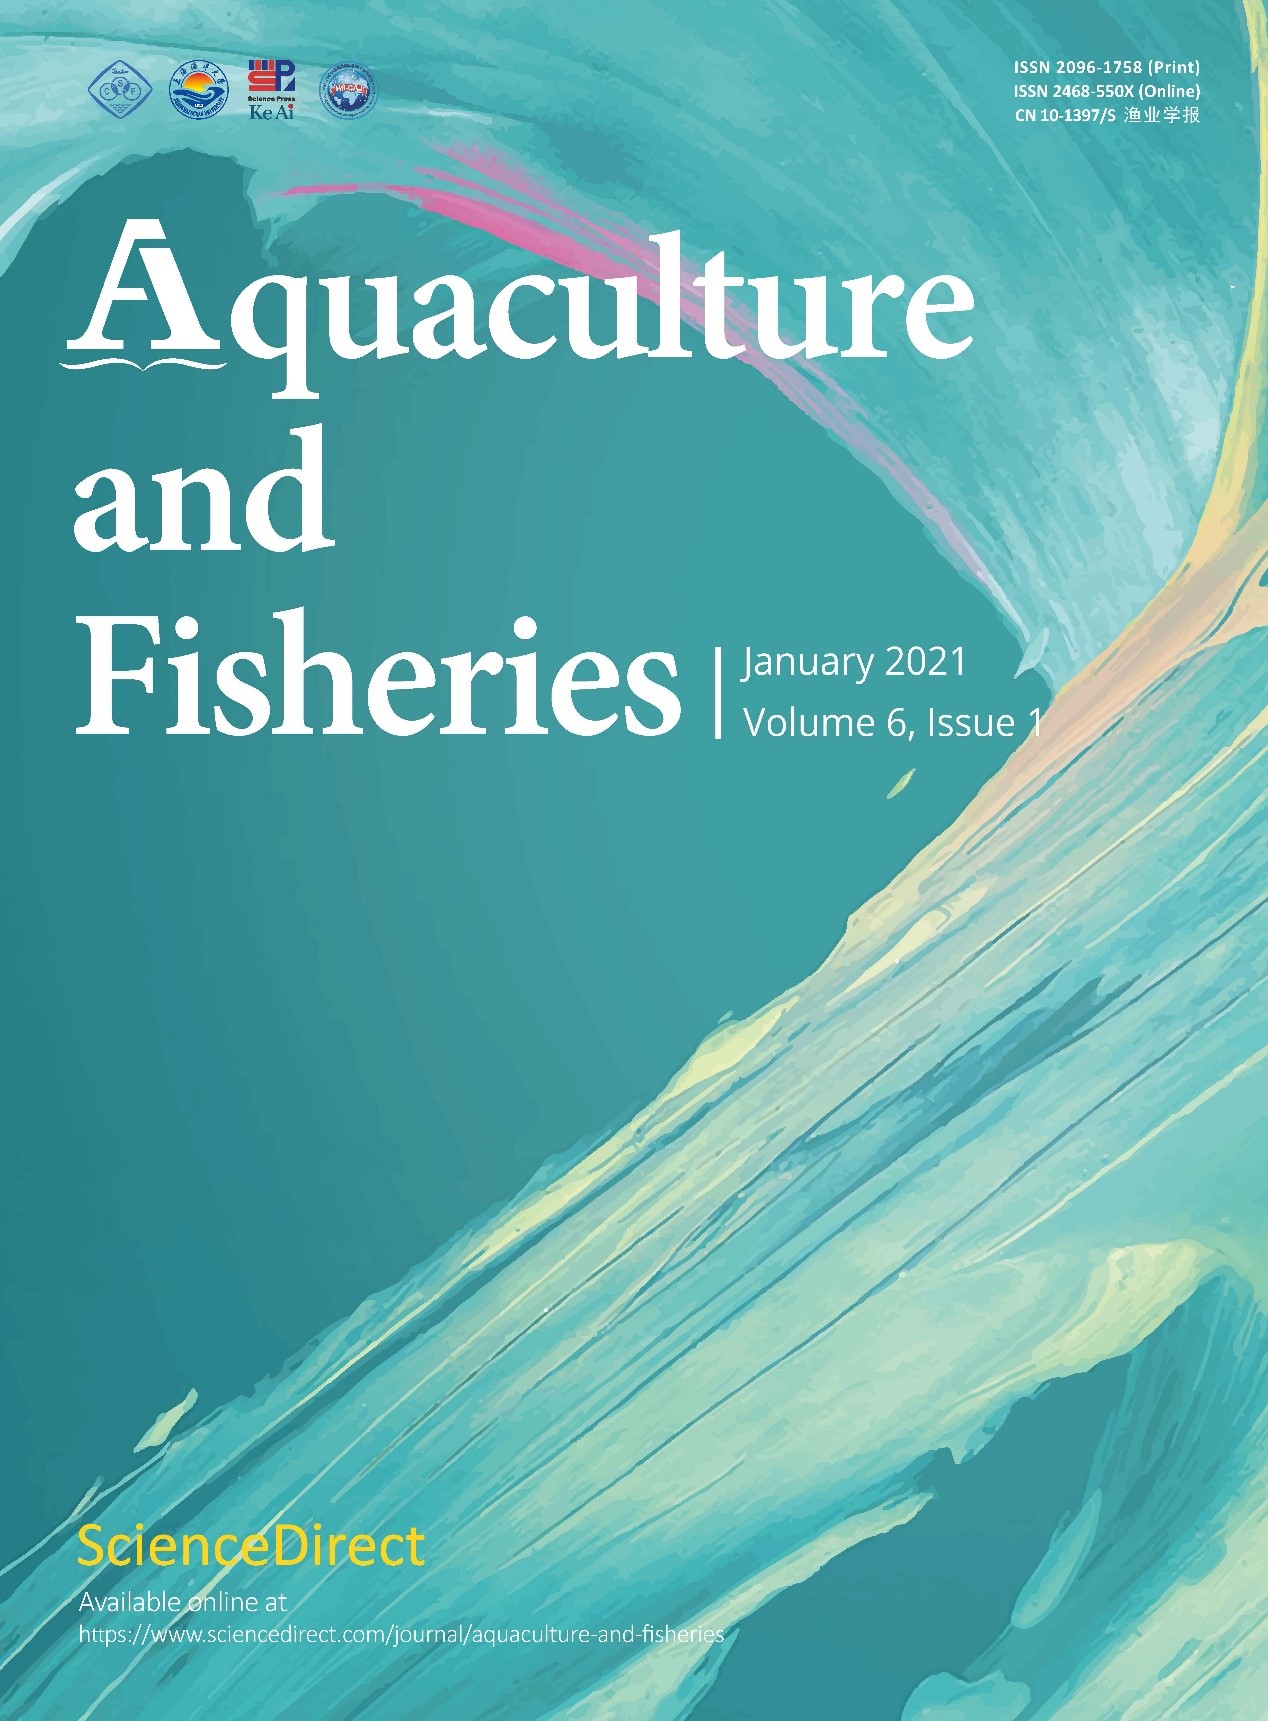 《Aquaculture and Fisheries》.jpg